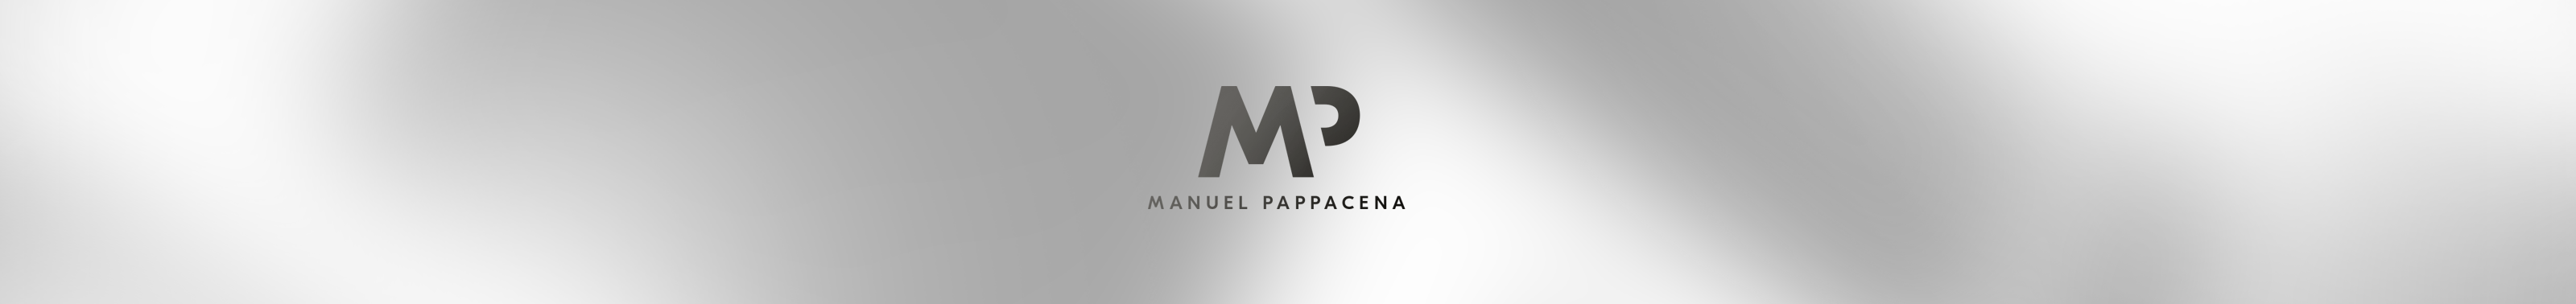 Manuel Pappacenas profilbanner